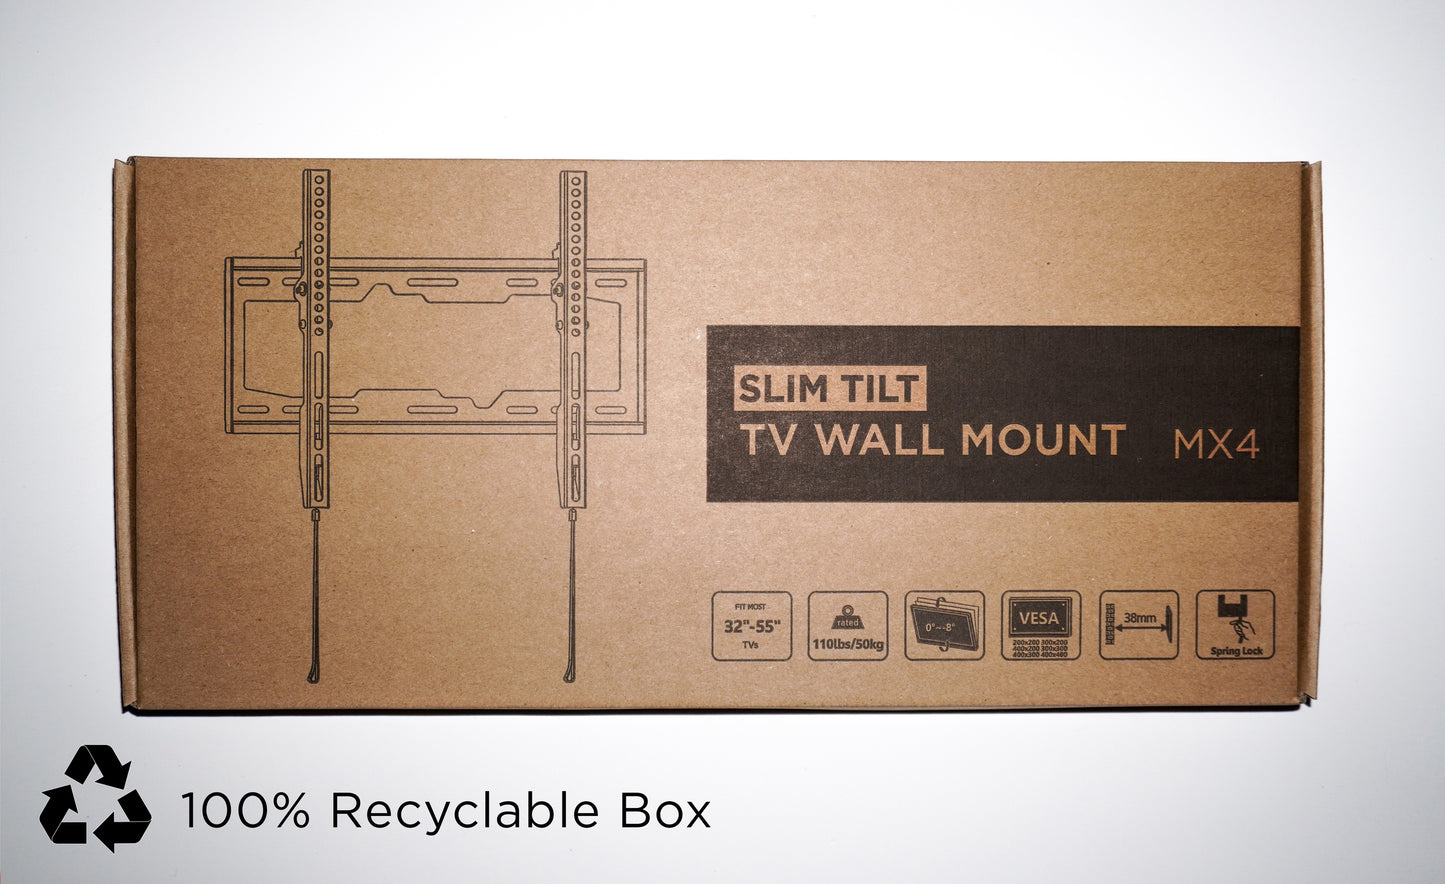 Best Slim Tilt Flat TV Wall Mount | Samsung tv installation screws included